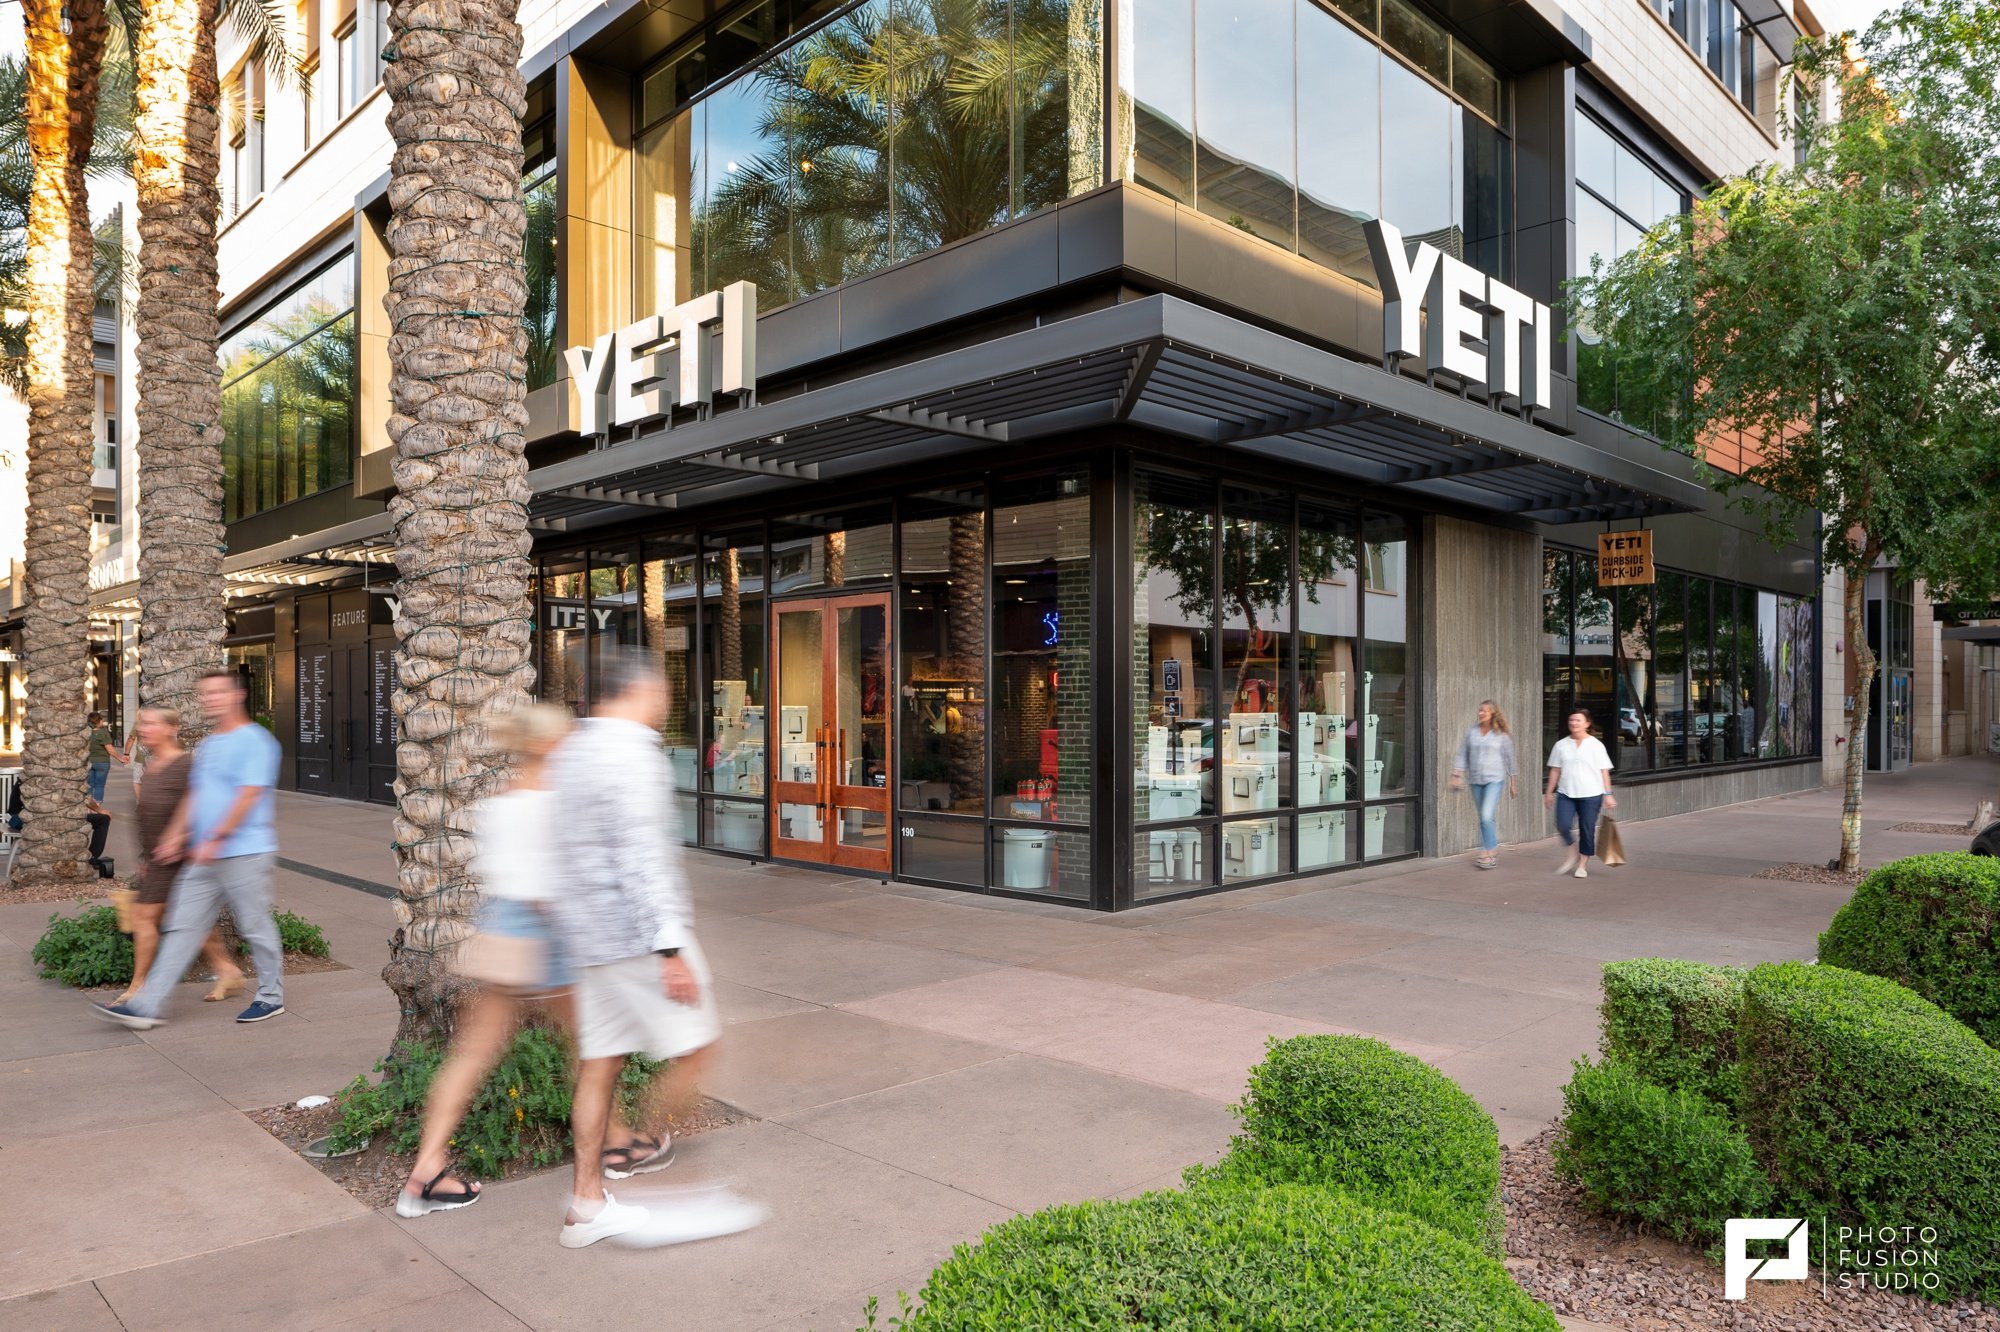 YETI at Scottsdale Quarter - Photo Fusion Studio